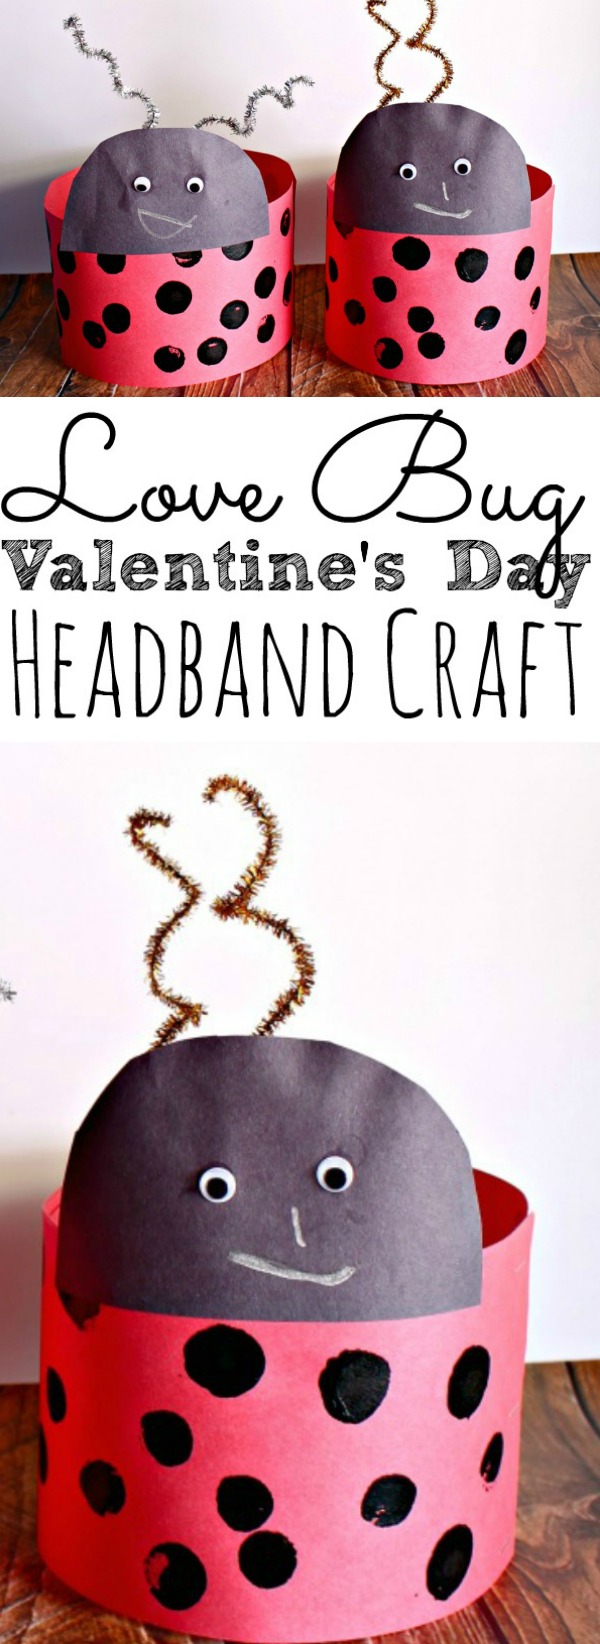 Valenitine's Day Lady Bug Headband Craft for Kids